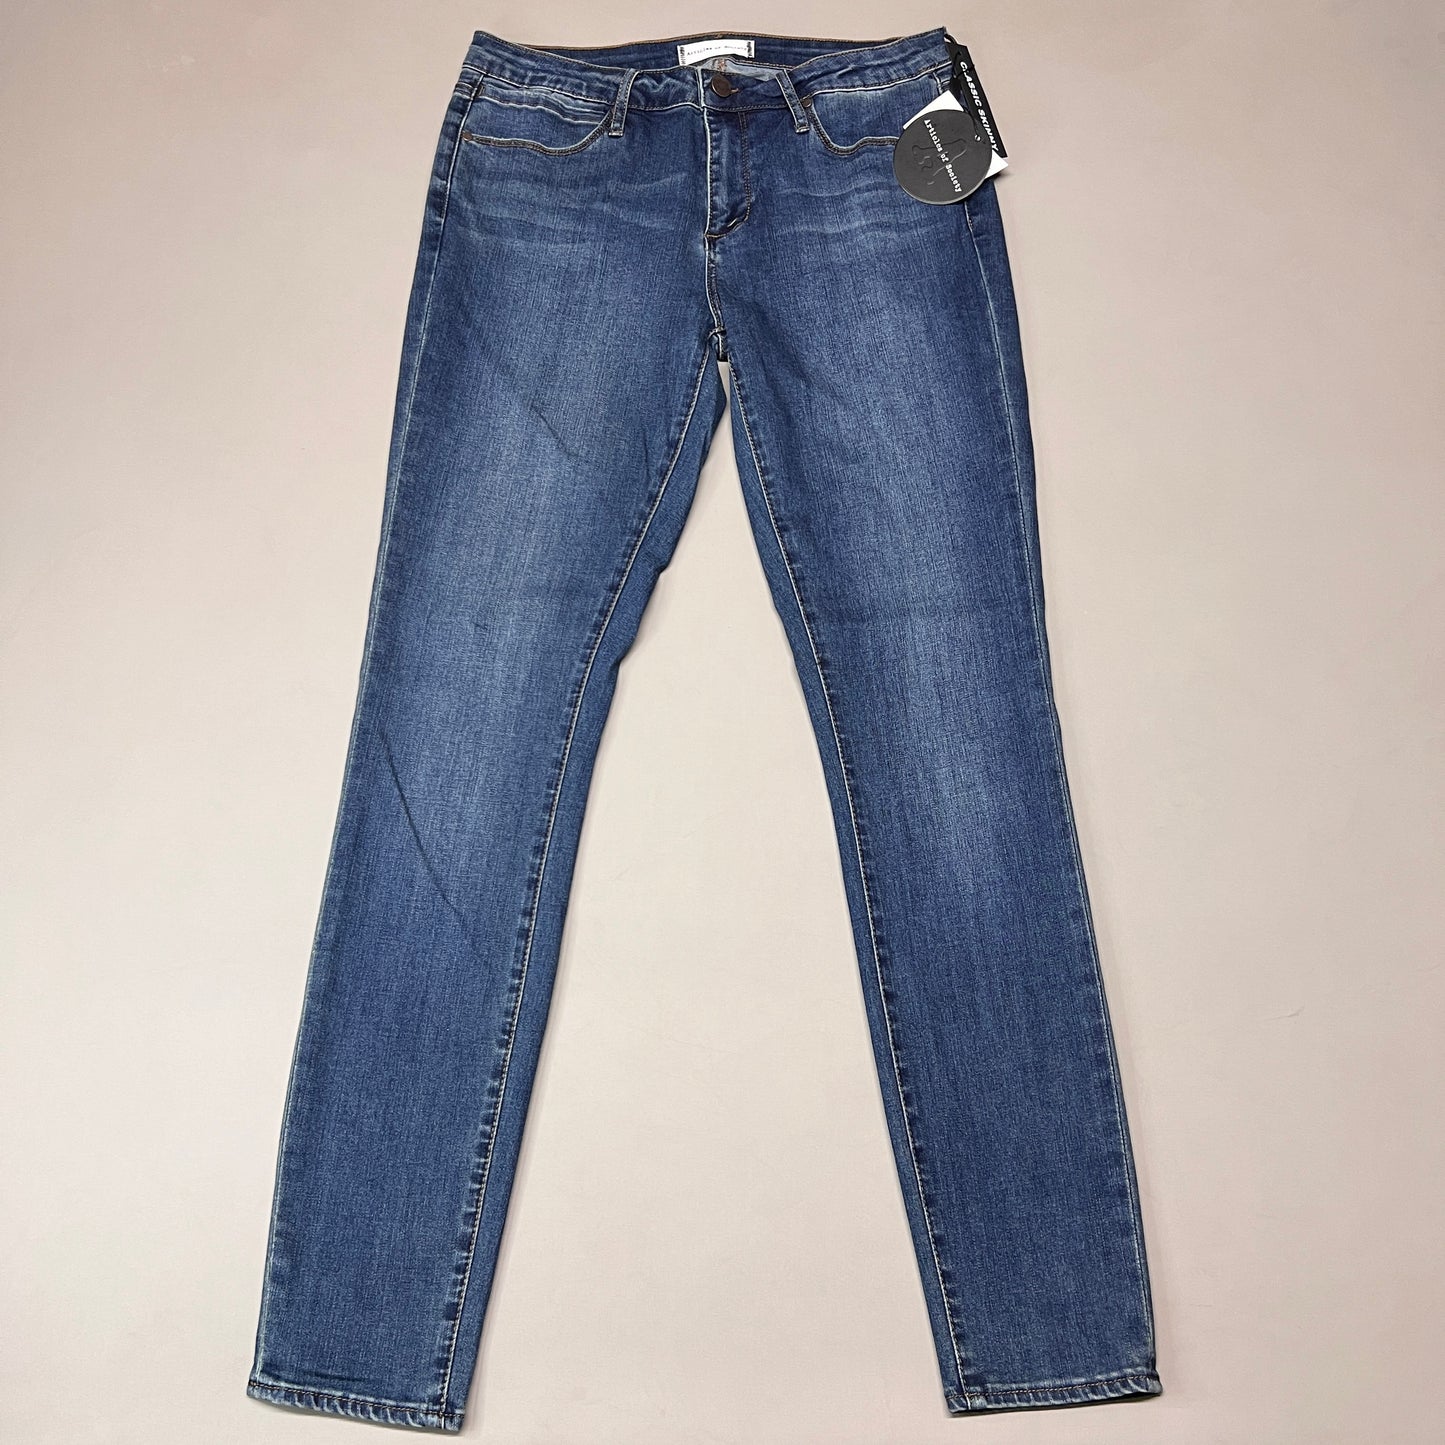 ARTICLES OF SOCIETY Aiea Denim Jeans Women's Sz 30 Blue 5352PLV-701 (New)